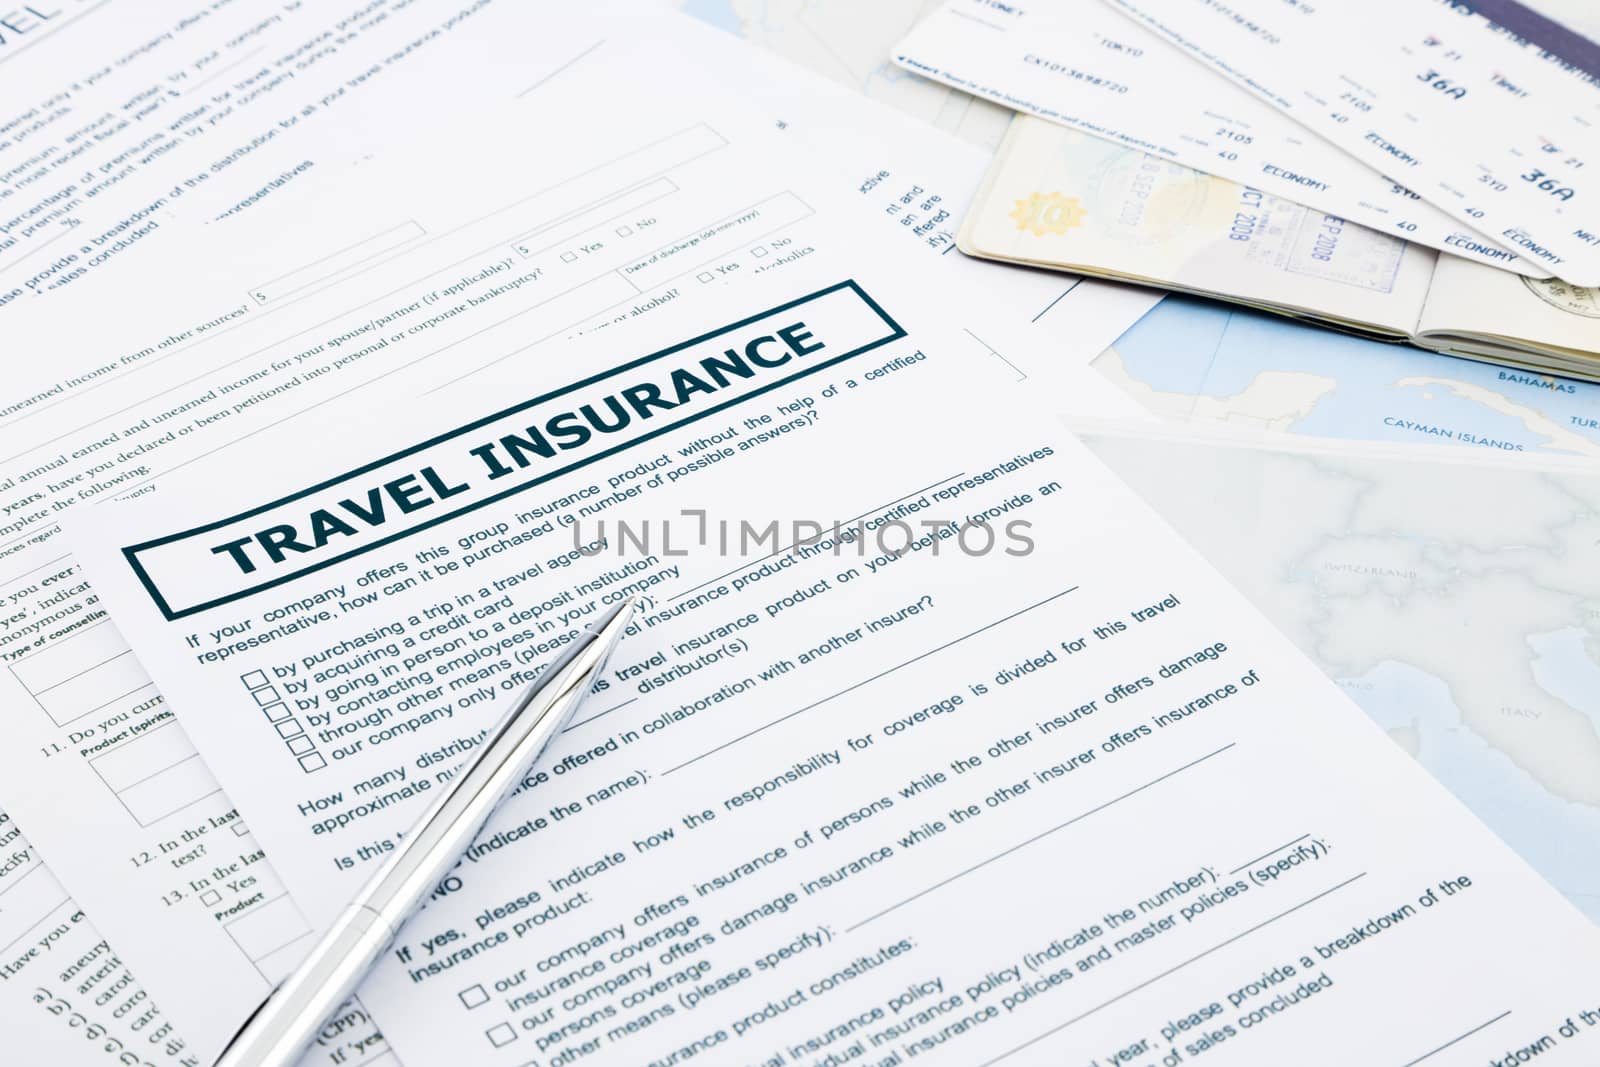 travel insurance form, passport and tickets  by vinnstock